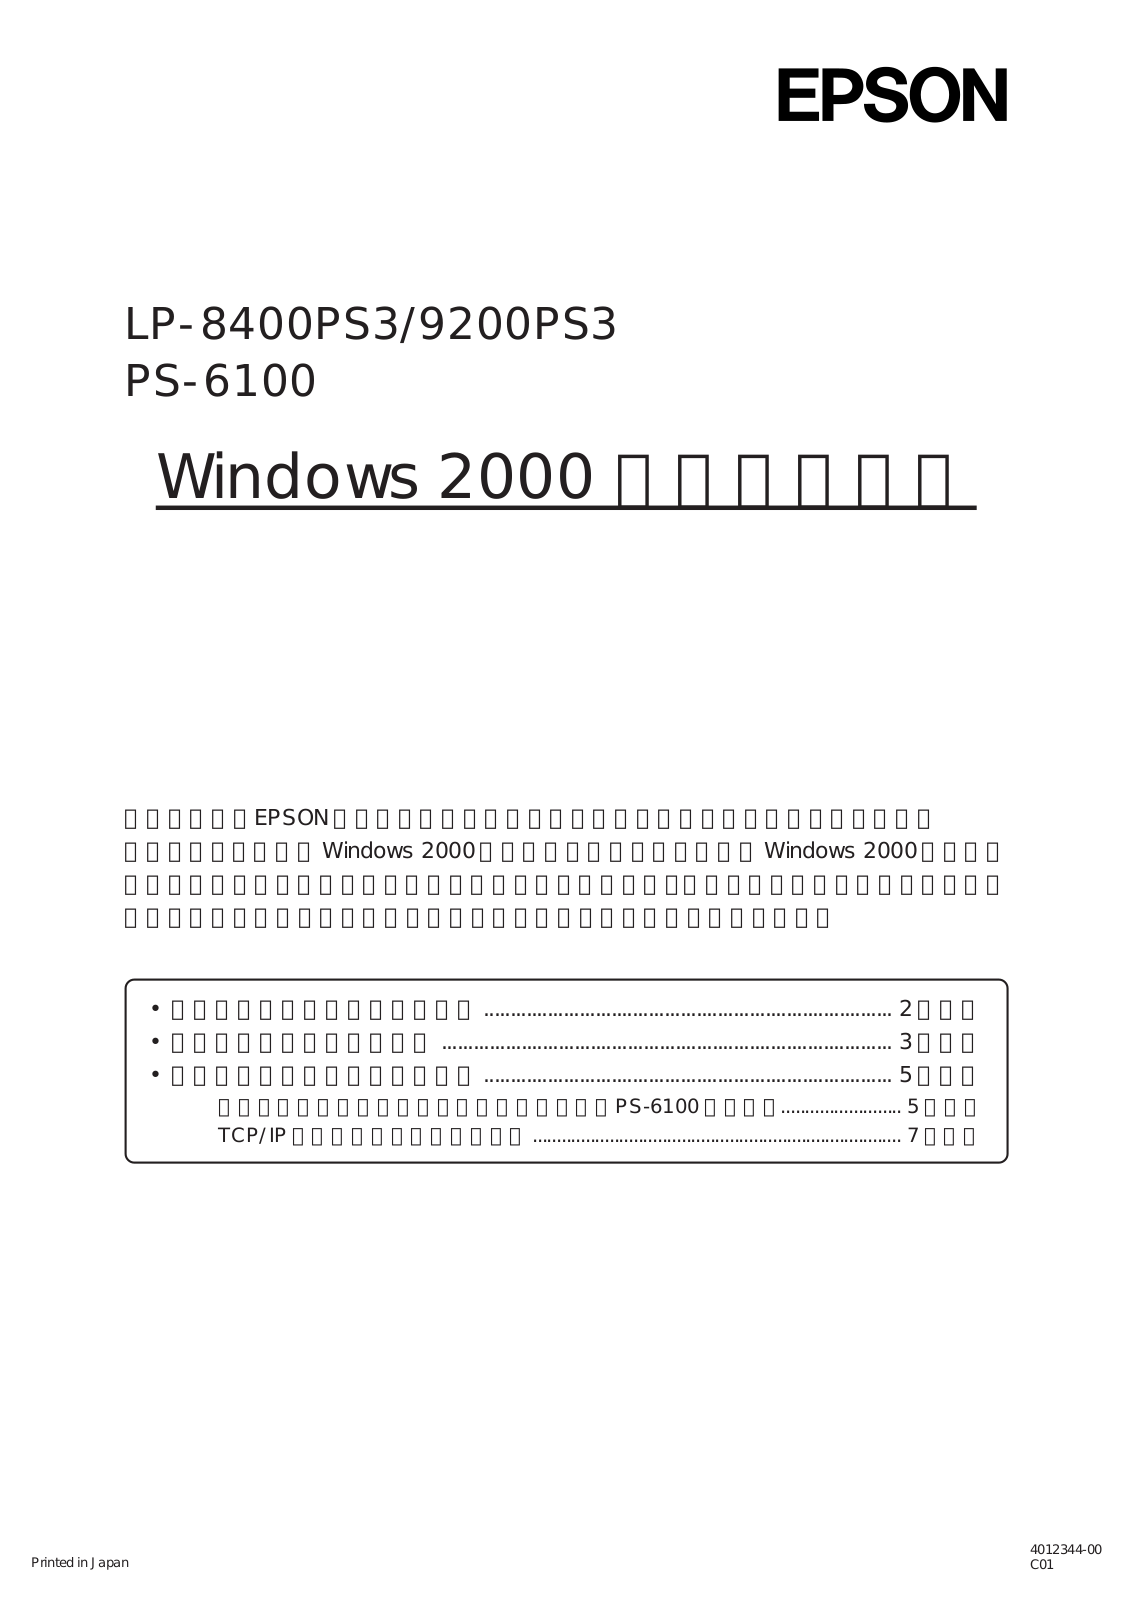 EPSON LP-8400PS3, LP-9200PS3, PS-6100 Instruction manual for Windows 2000